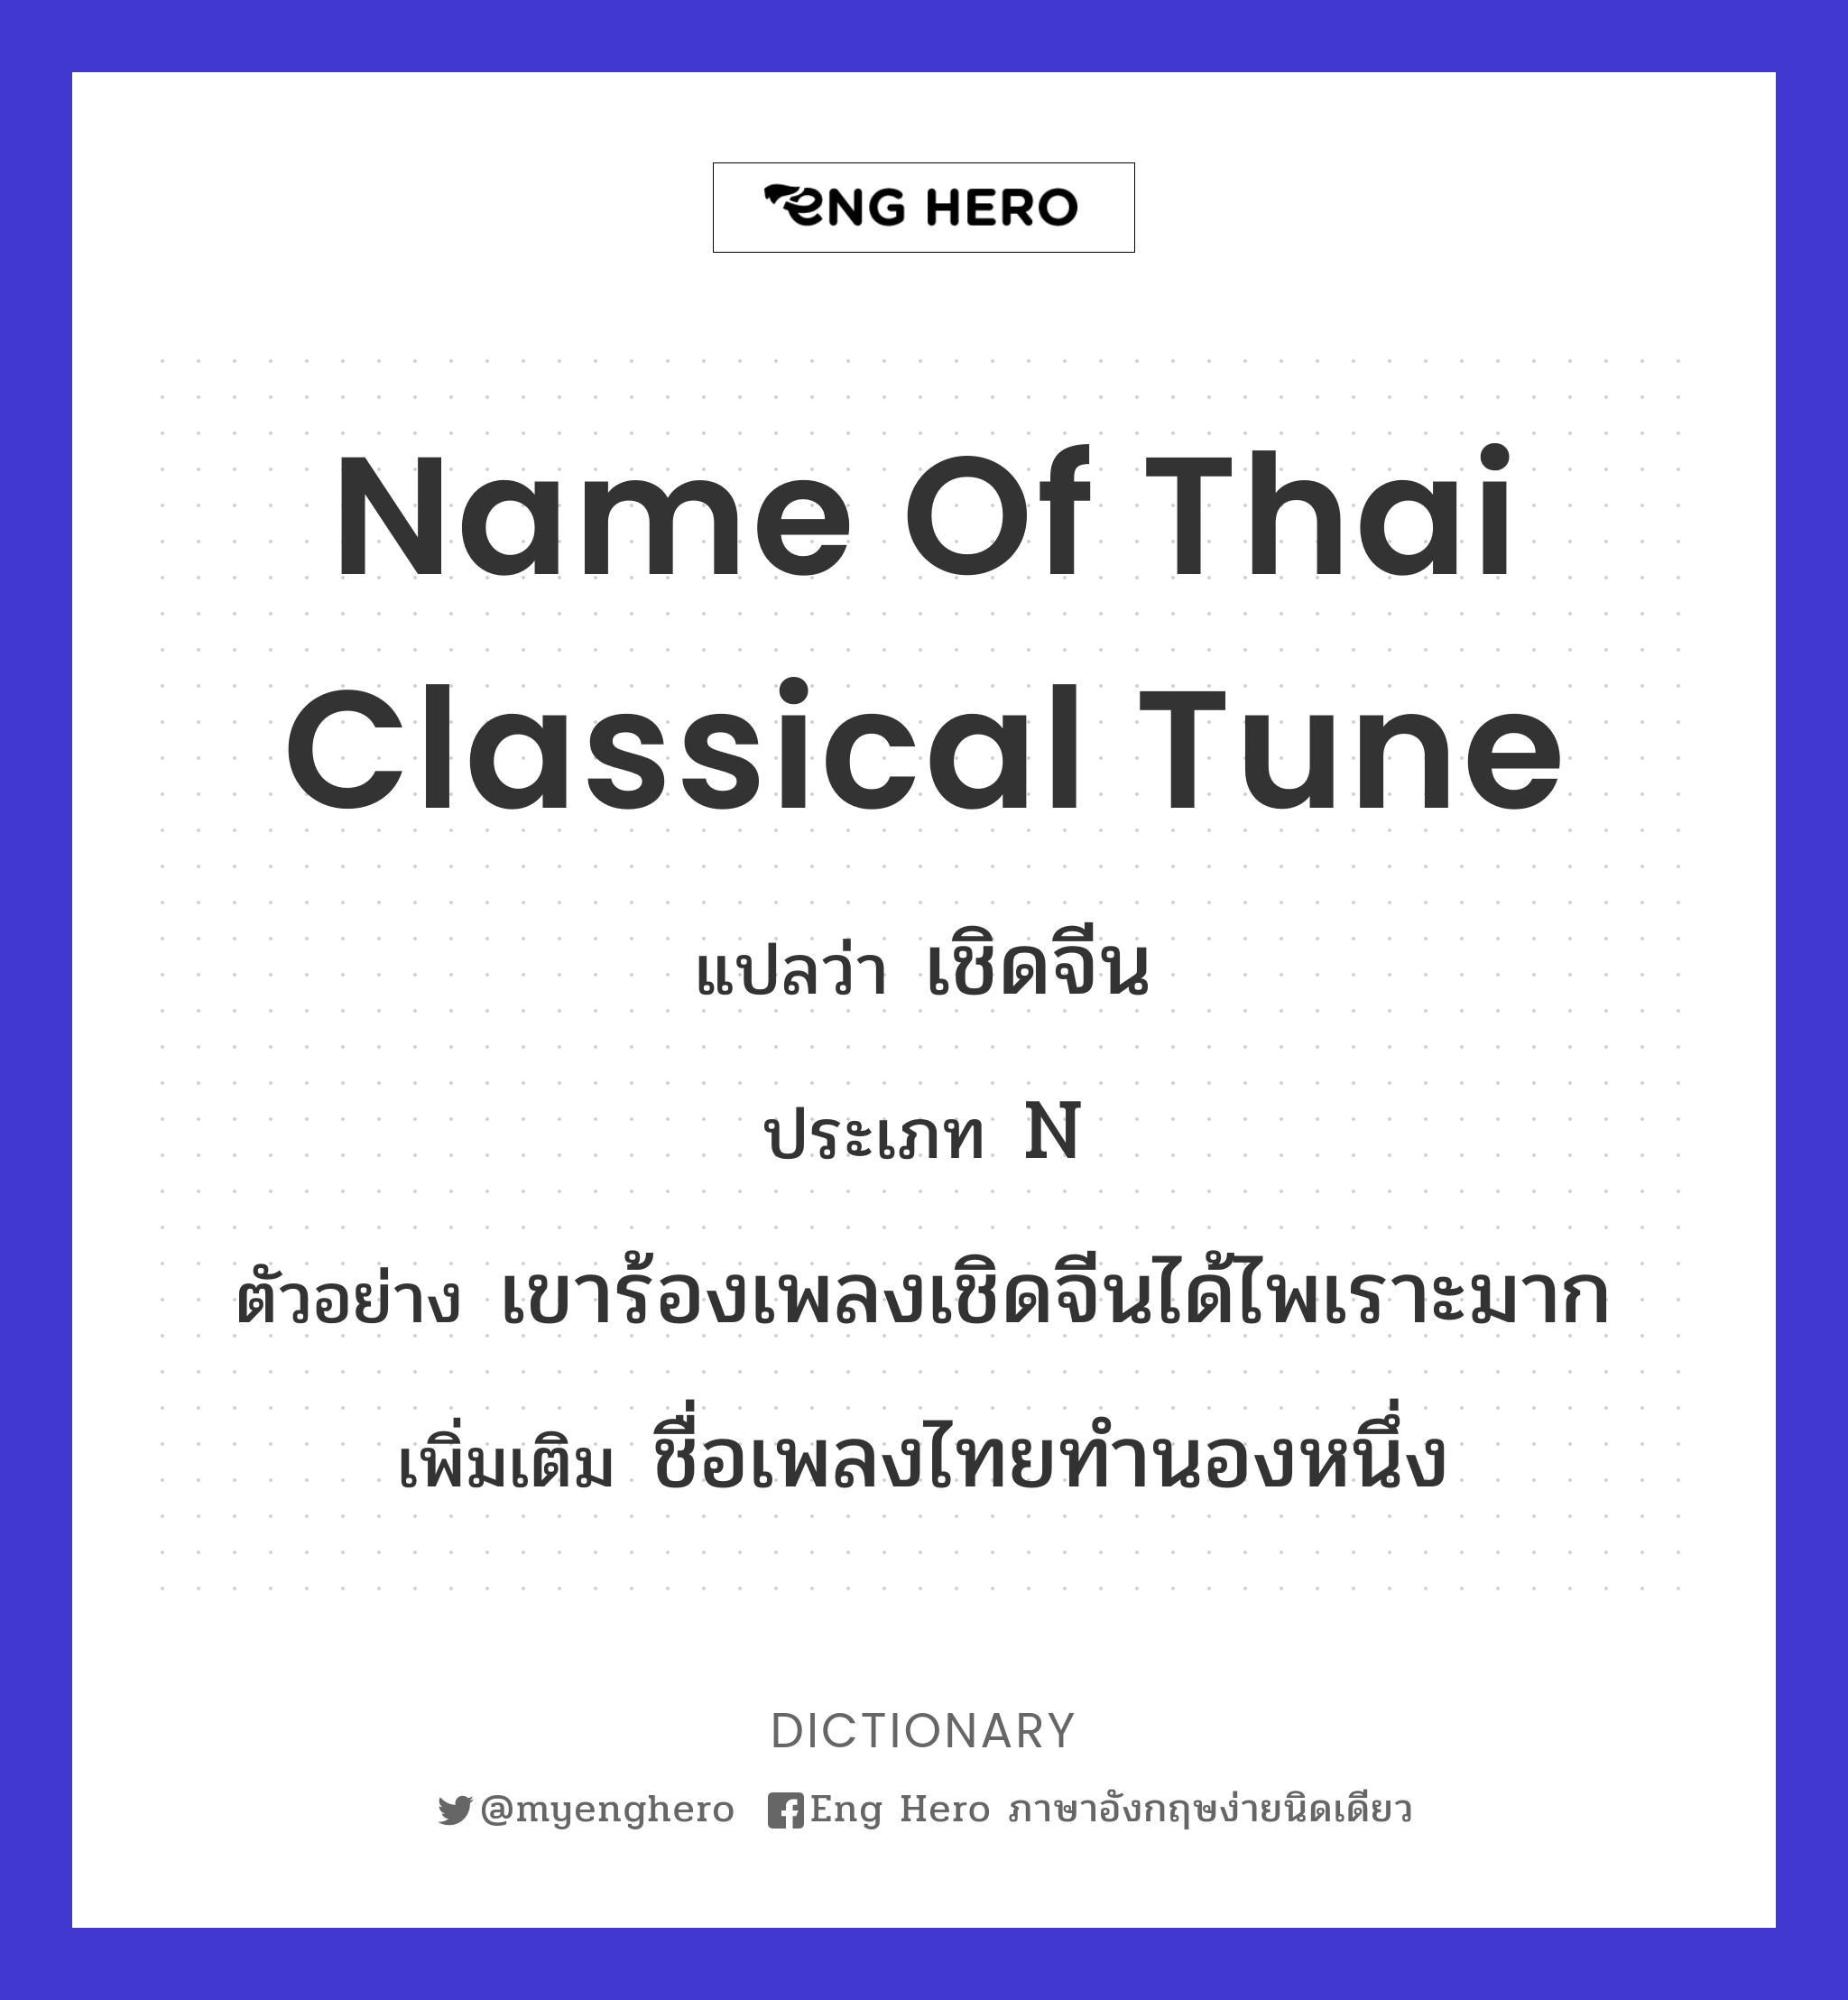 name of Thai classical tune